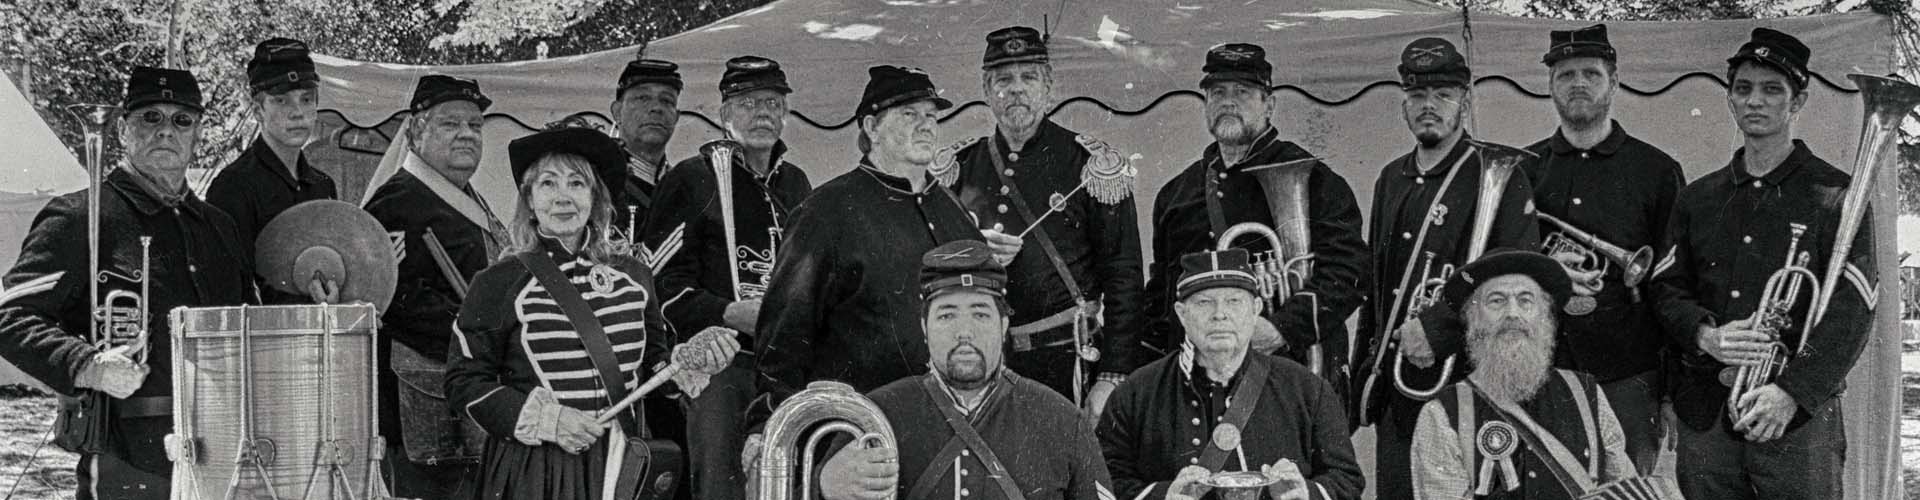 Band of the California Battalion